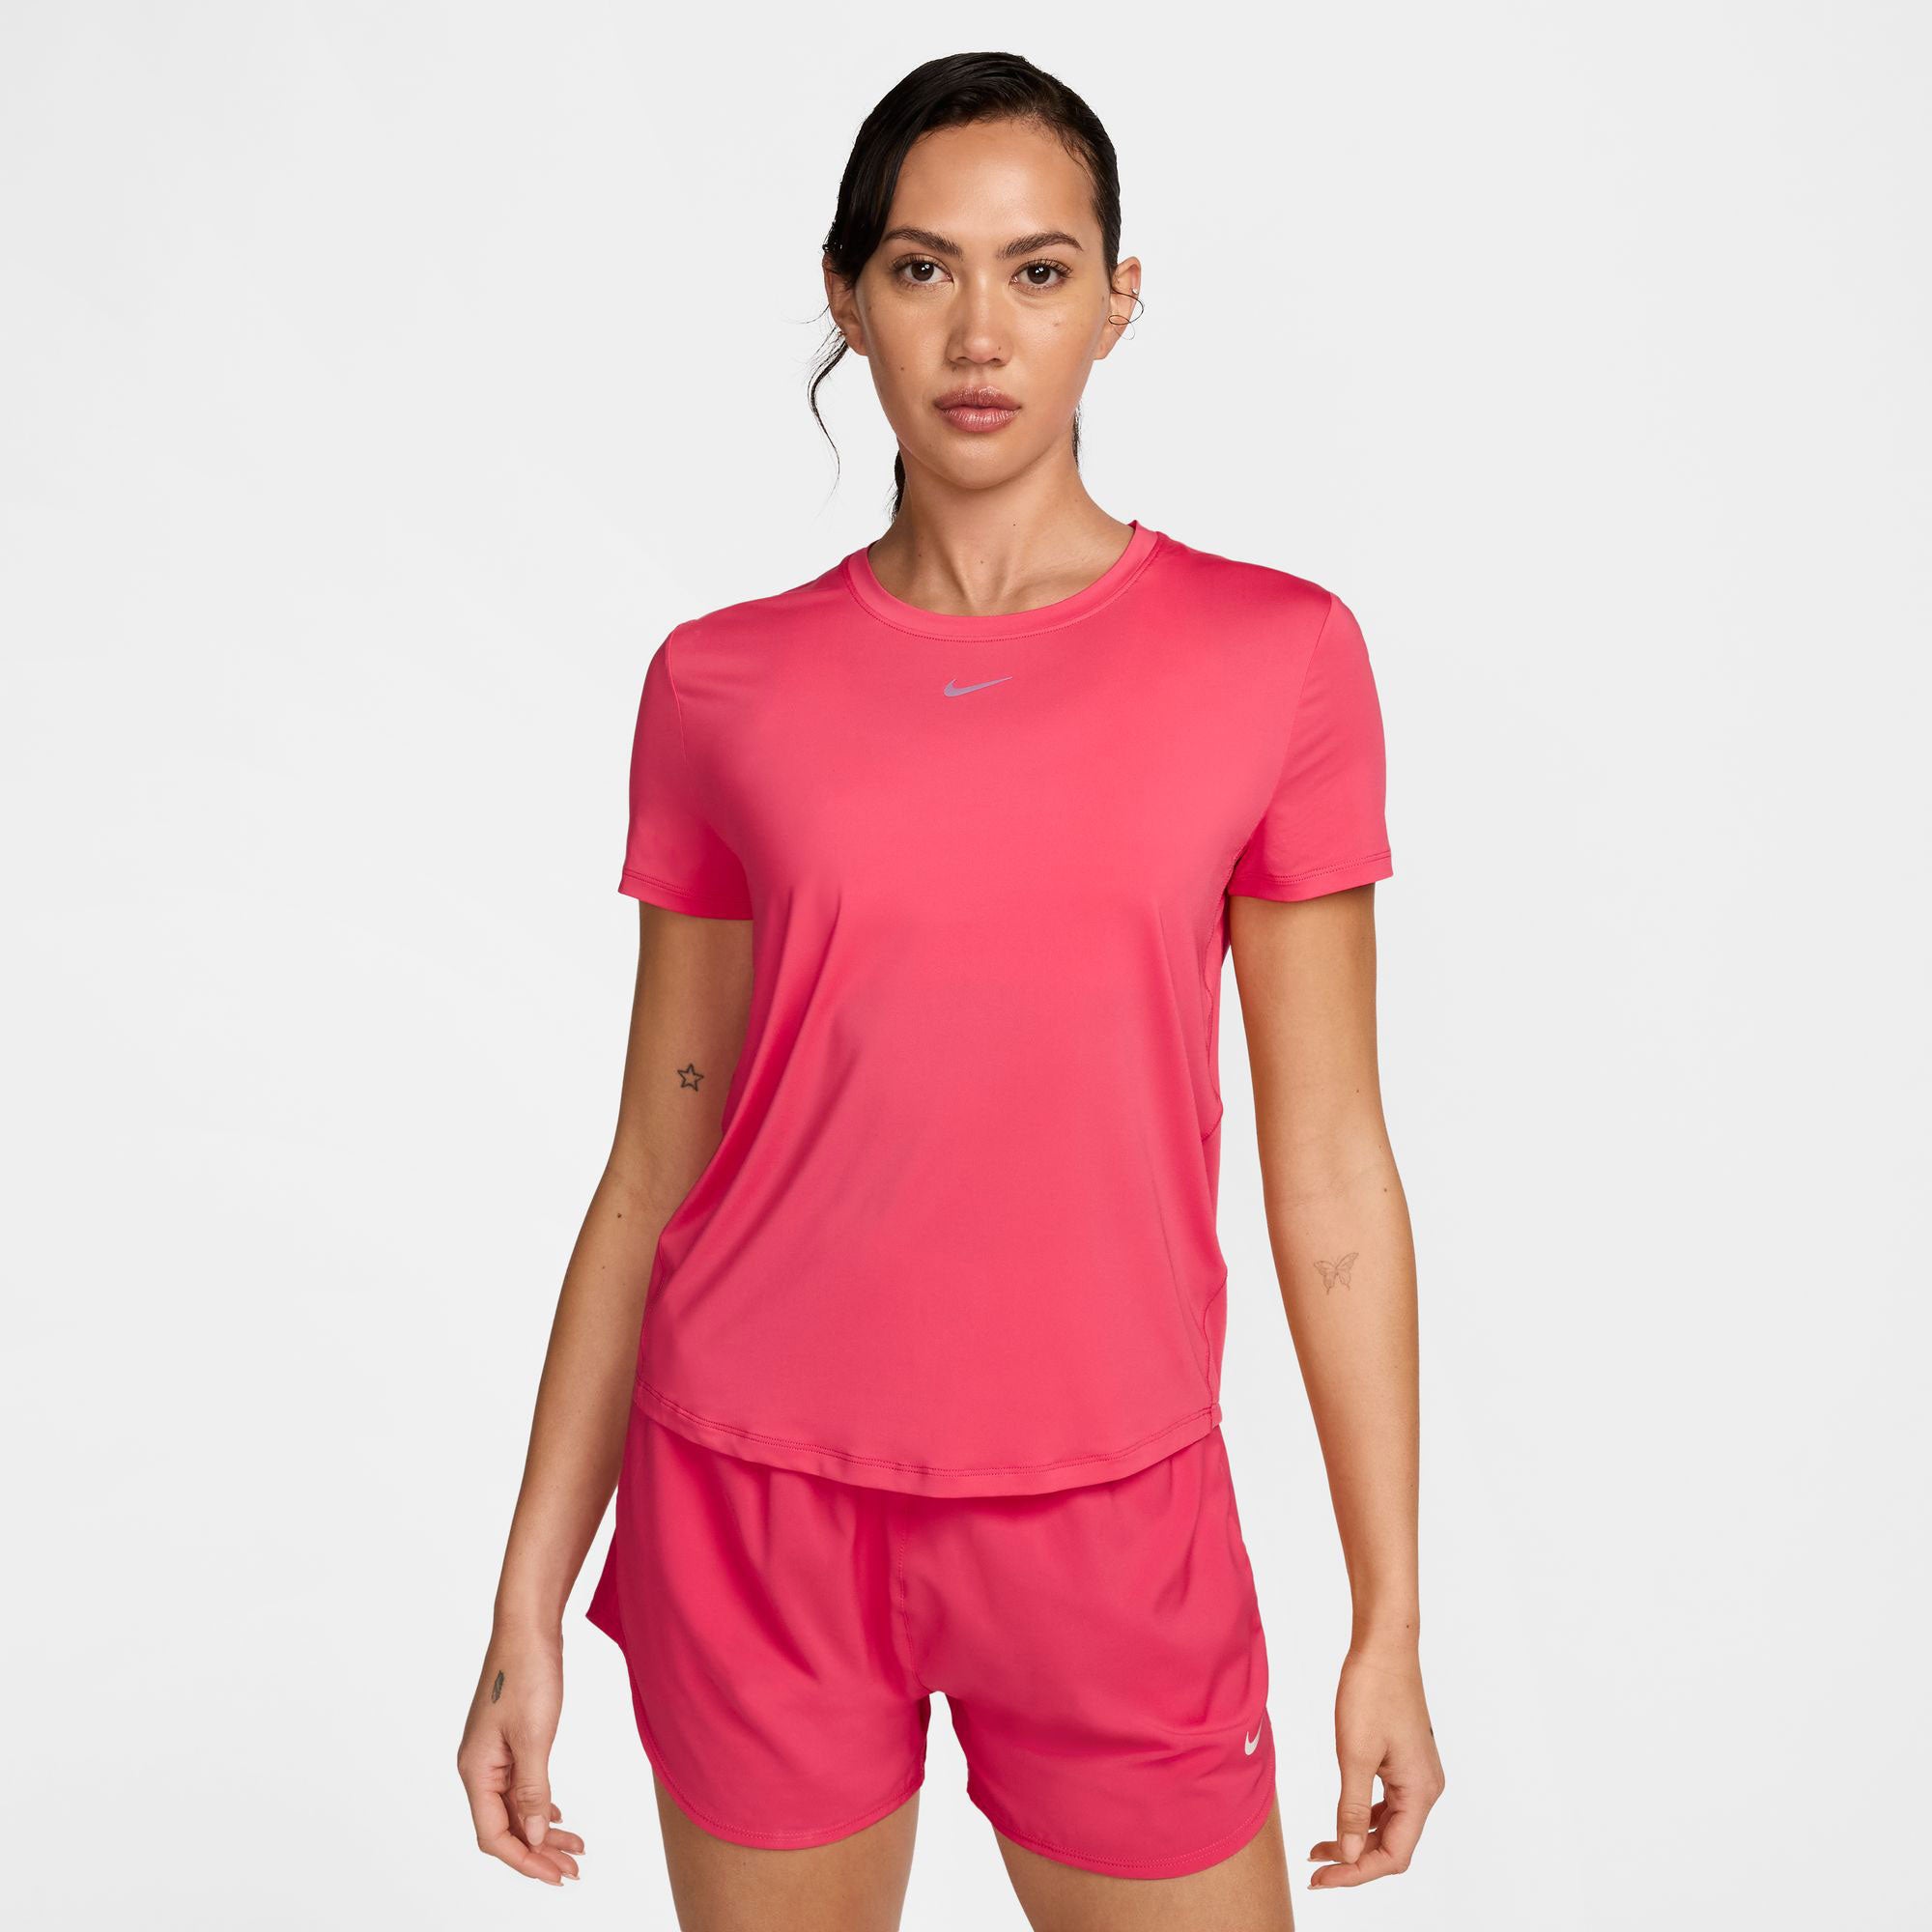 Nike One Classic Women's Dri-FIT Shirt - Pink (1)